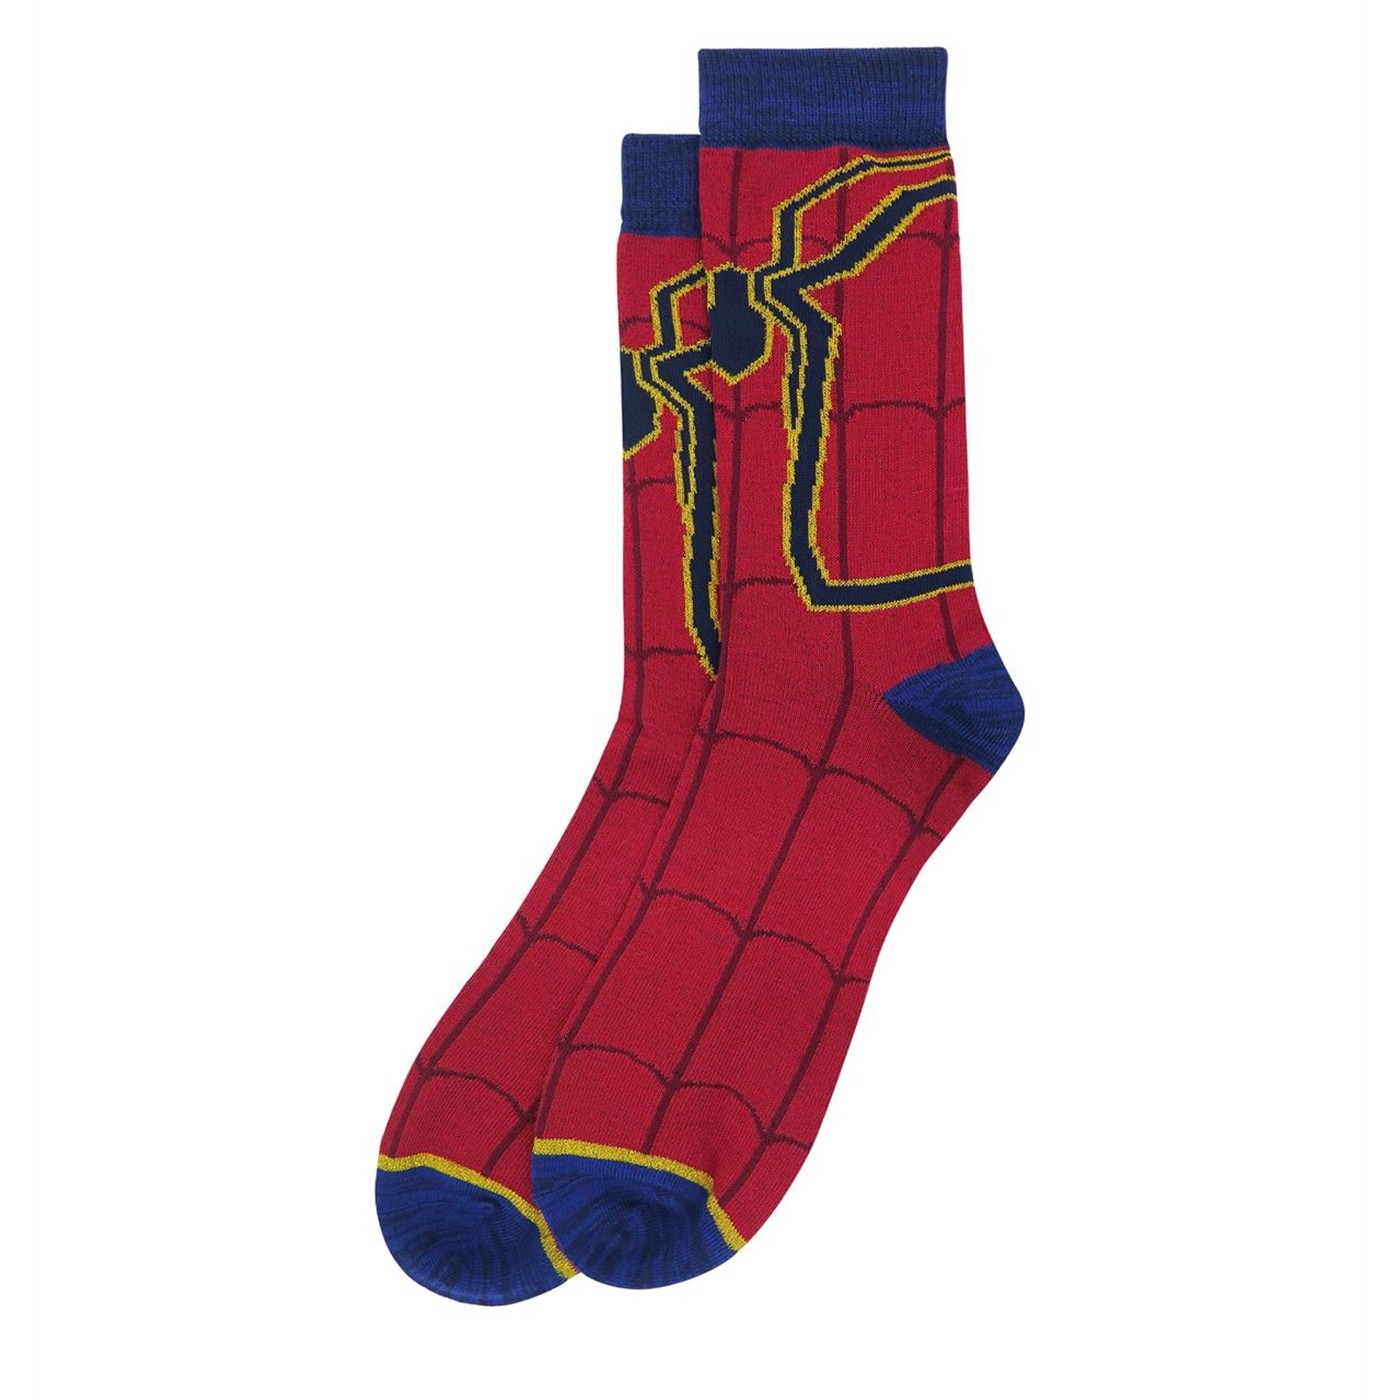 Avengers Infinity War Iron Spider Crew Socks